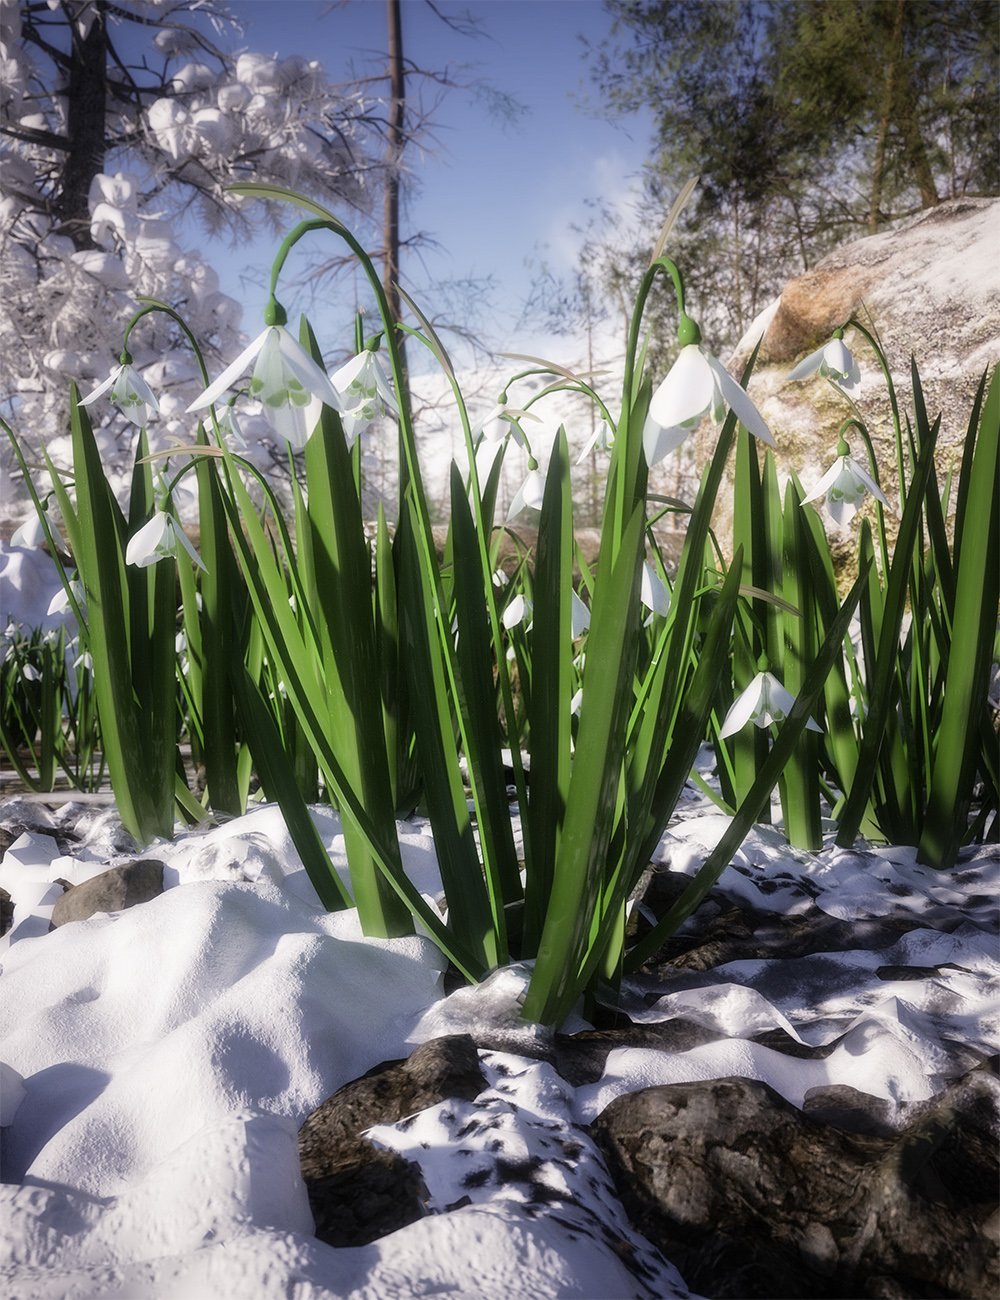 Wild Flowers Vol 6 - Spring Plants by: MartinJFrost, 3D Models by Daz 3D